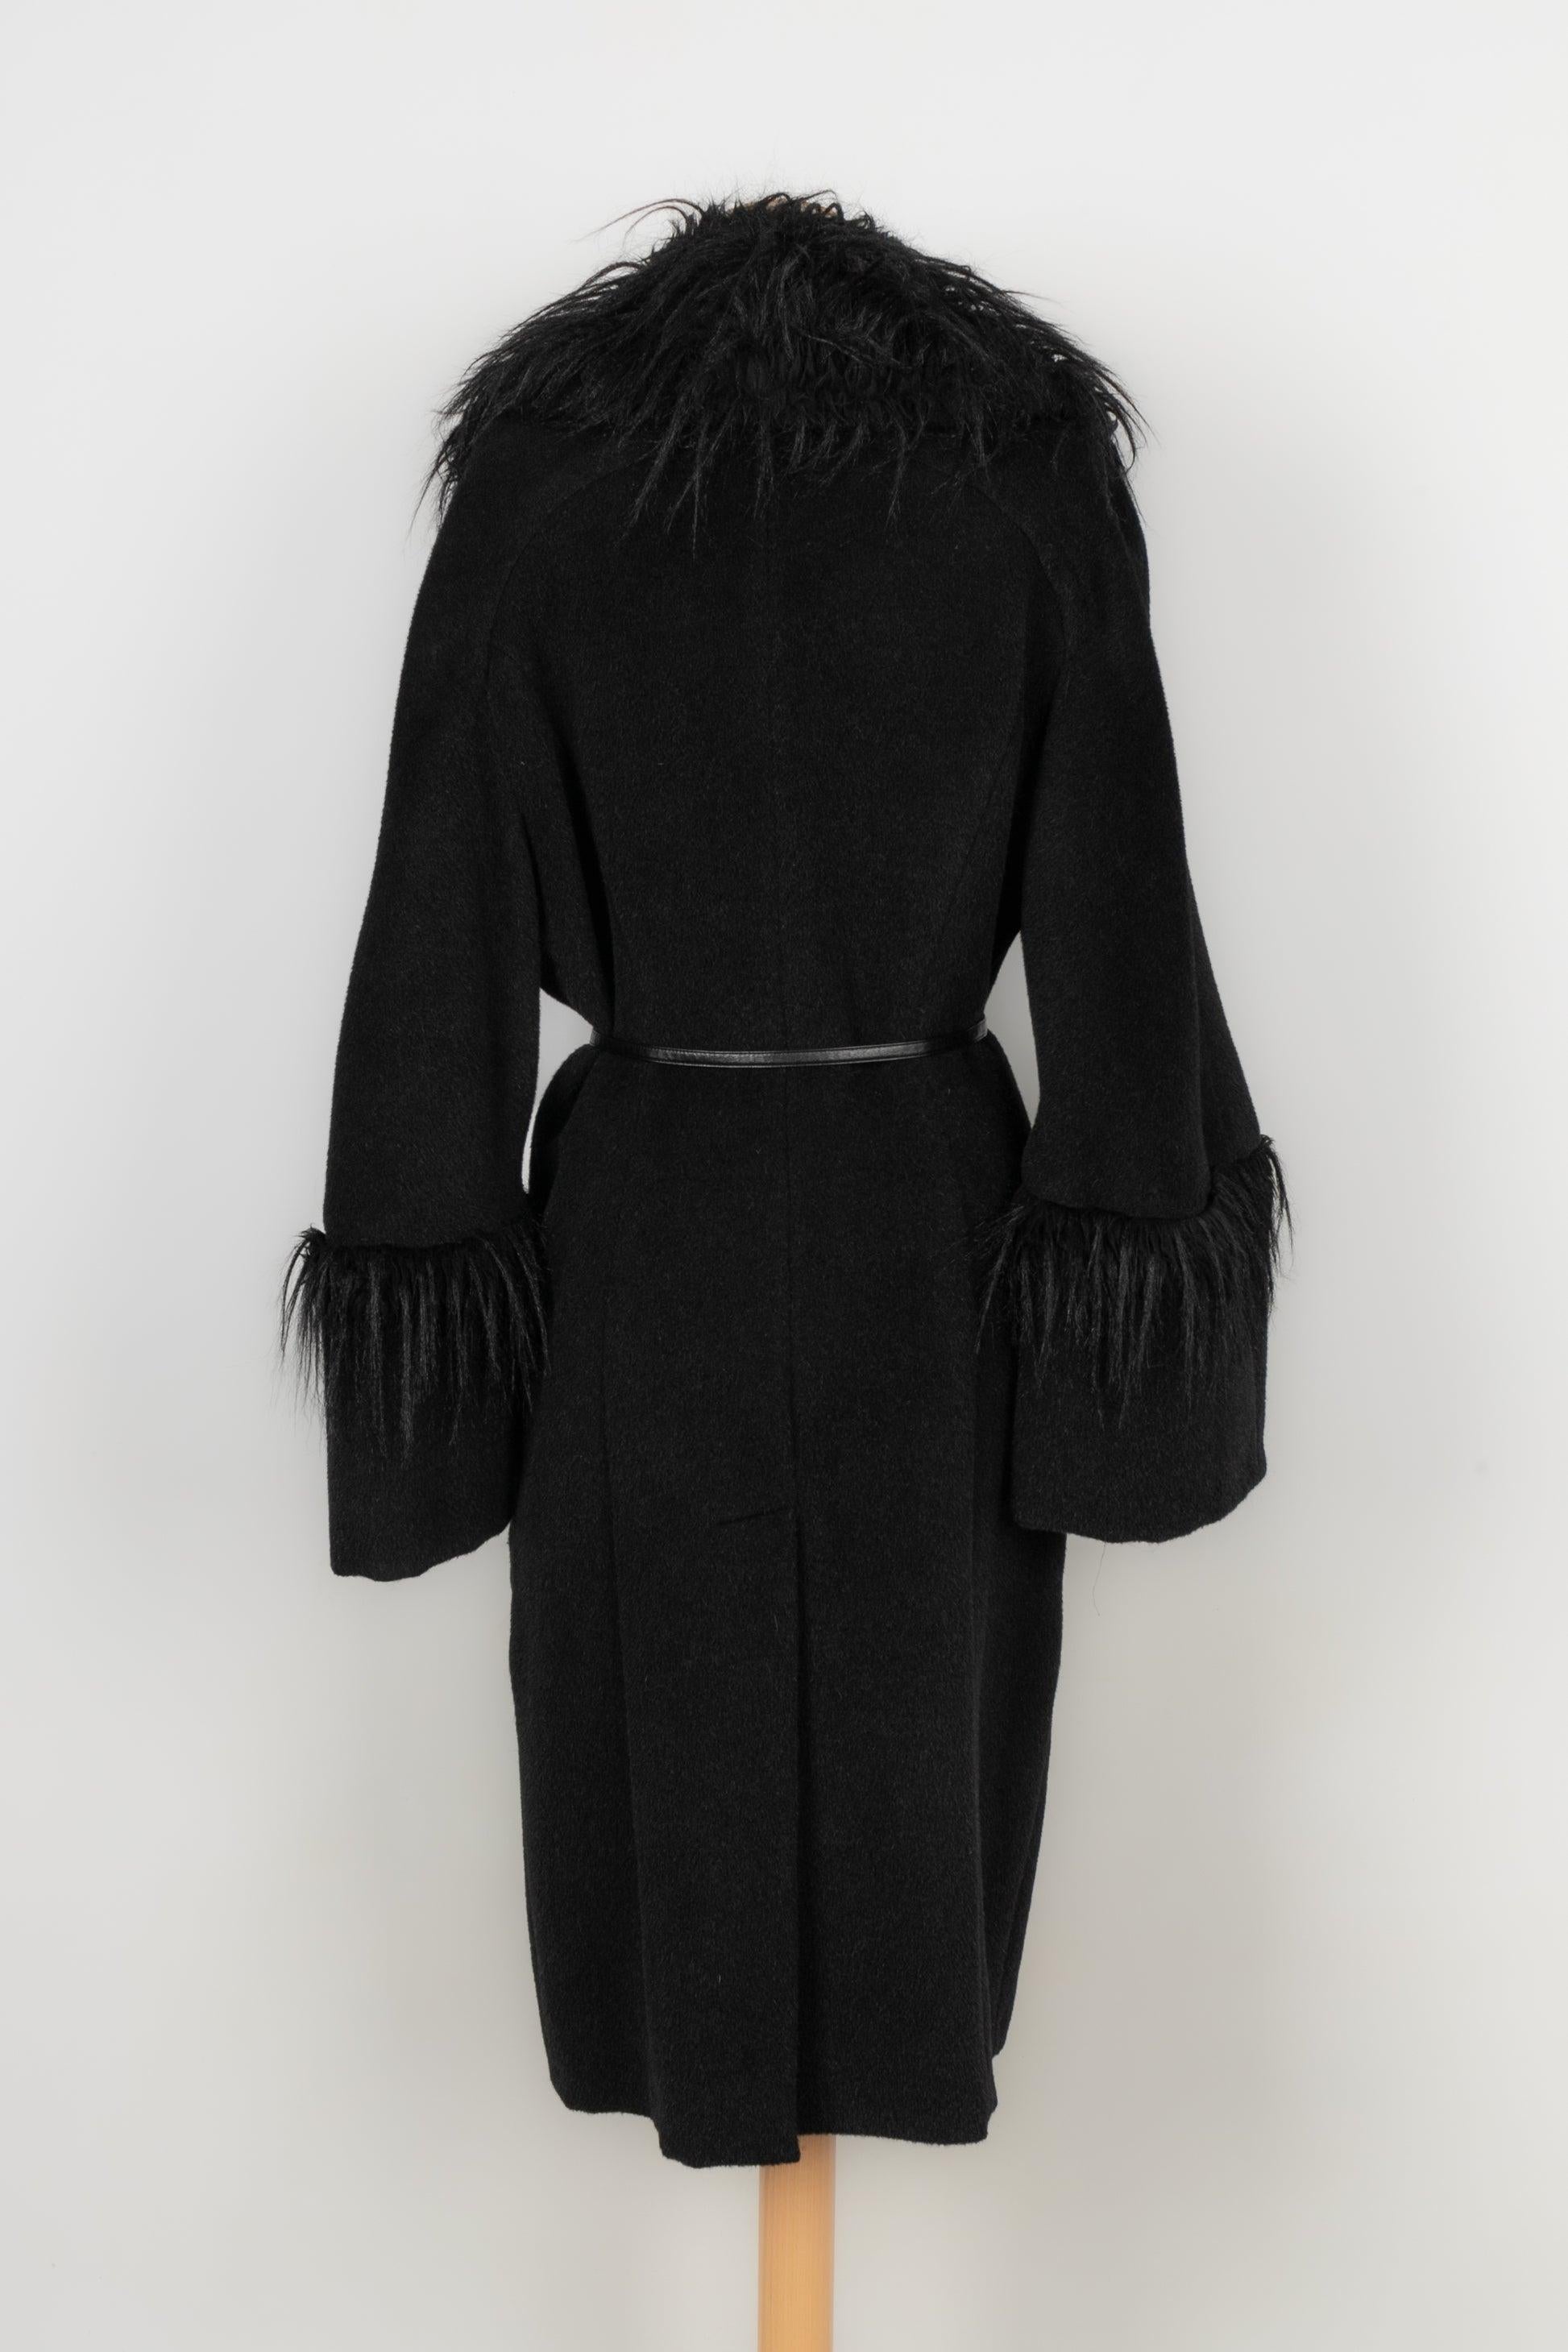 Women's Mugler Black Coat Edged with Faux Fur 40FR, 2000s For Sale